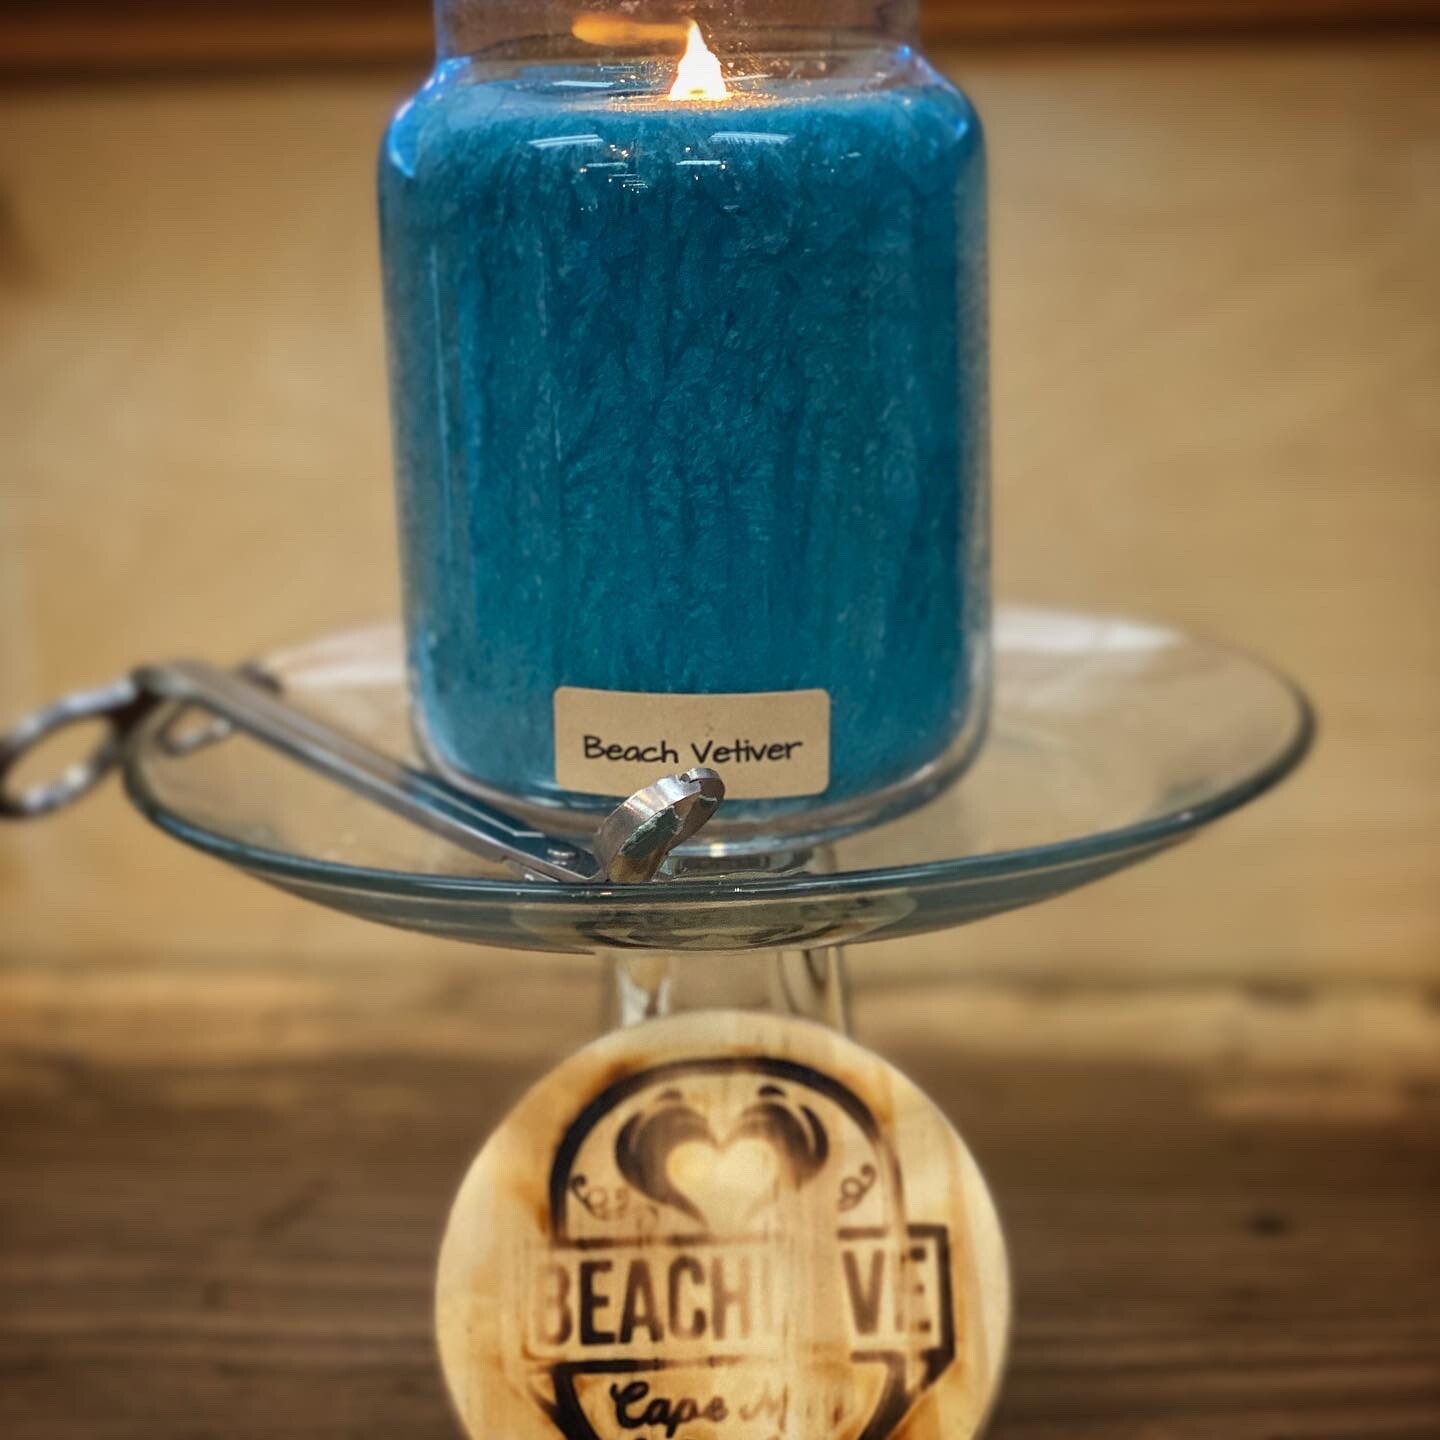 Beach Vetiver Apothecary Jar Candle x Beachlove